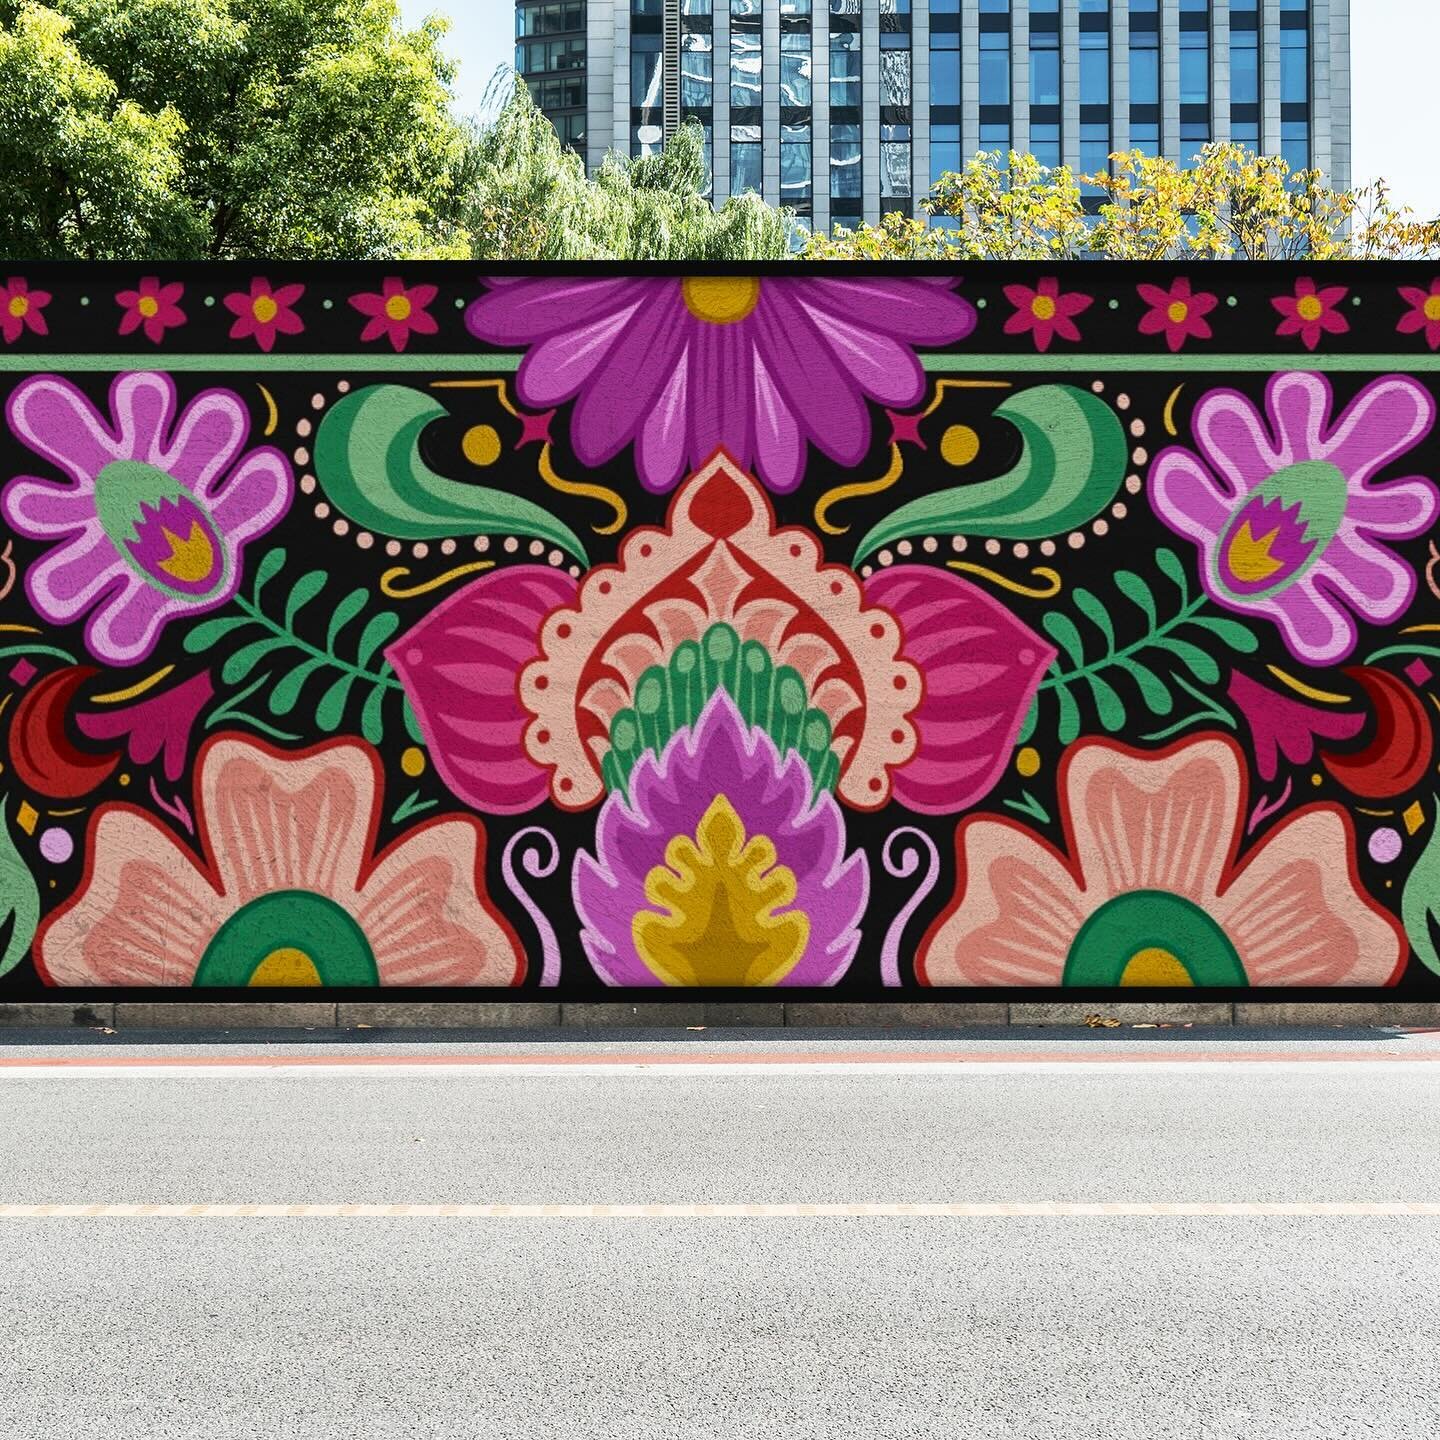 Transforming ordinary walls into bursts of magical blooms 🌸🌺✨ #murals #restaurantmural #businessmural #interactivemural #vinylmural #art #digitalart #wallwrap #vinylwrap #creativewrap #vinylgram